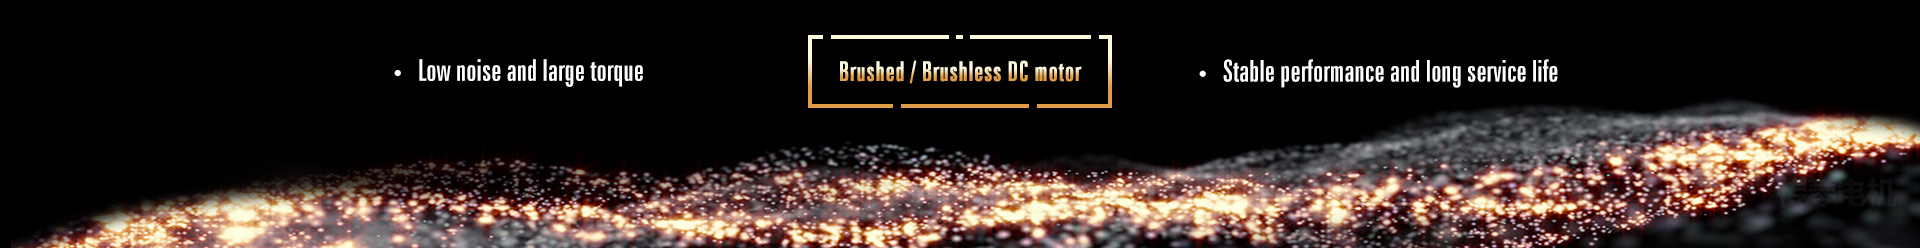 Brushed DC motor and brushless DC motor